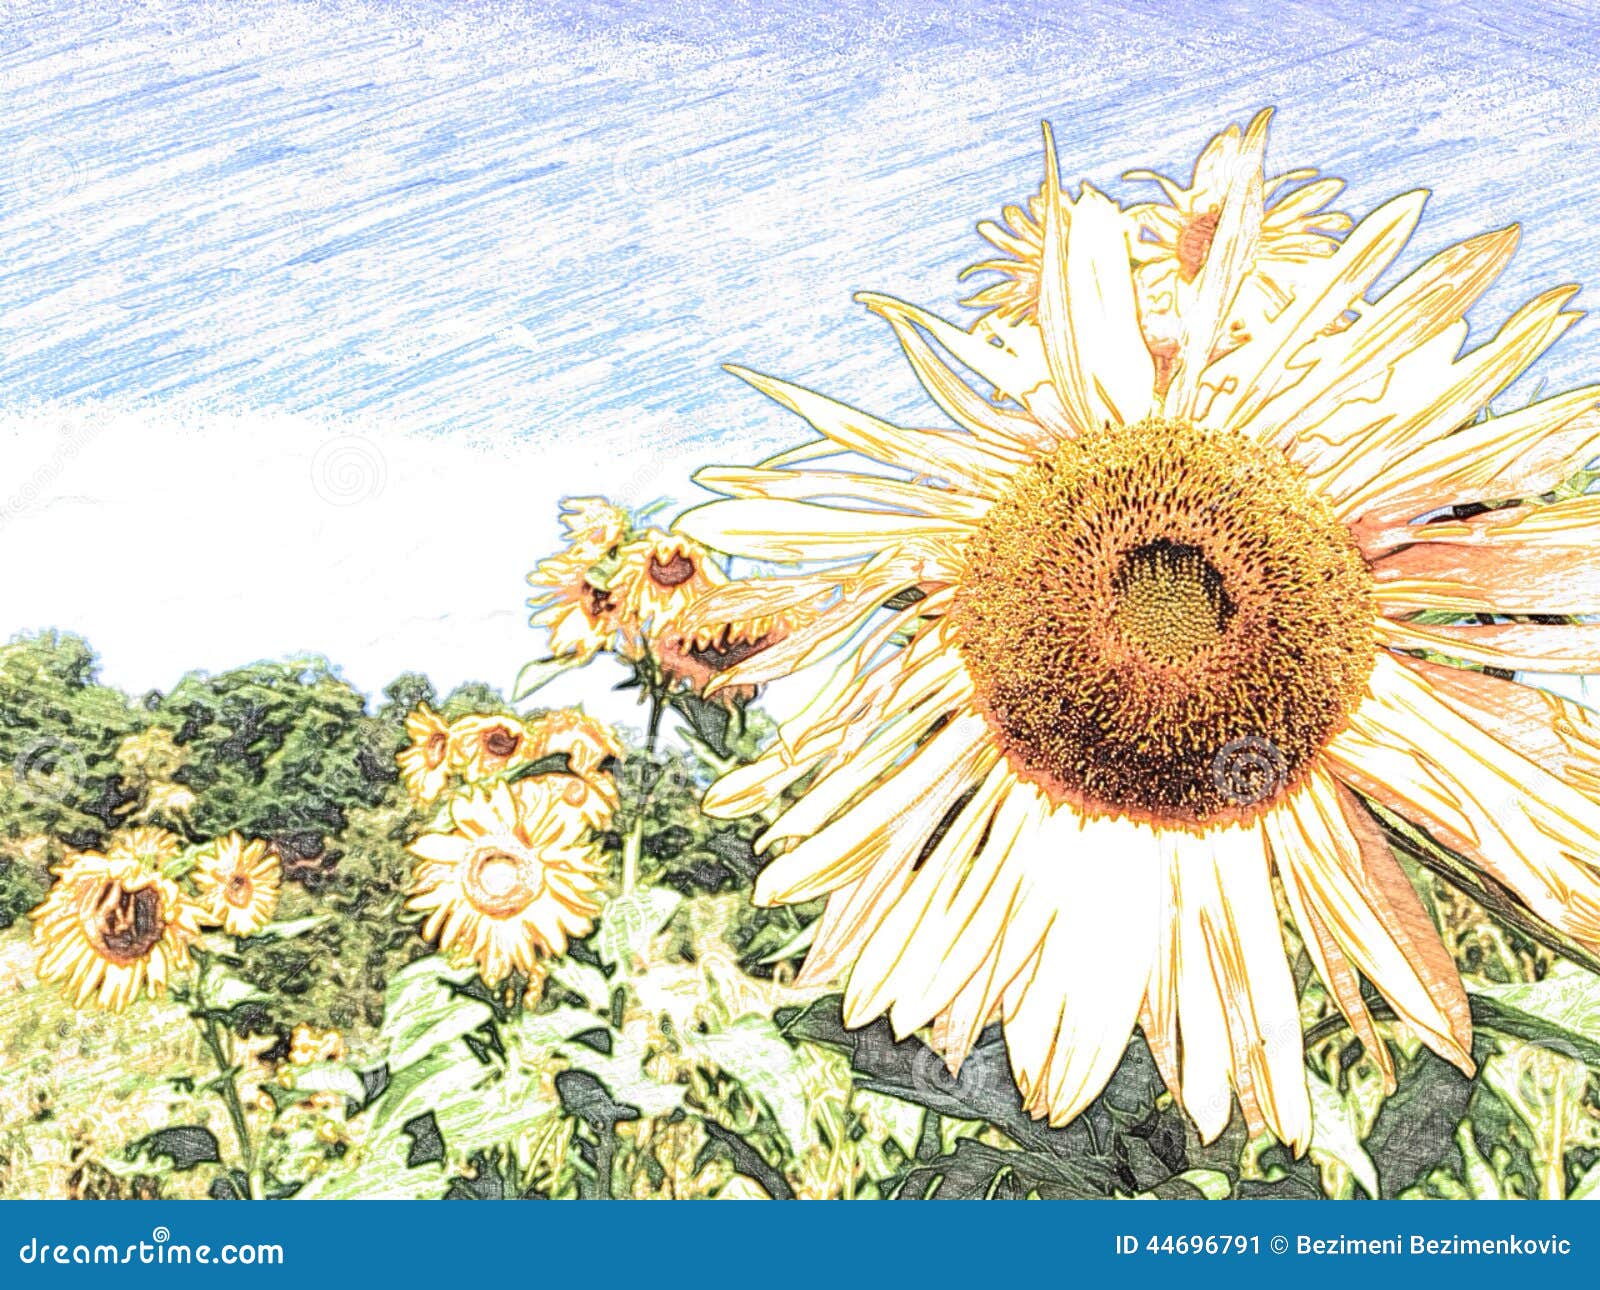 Serbian Artists  Digital Art On Canvas  Sunflower Field  Globalchocostore